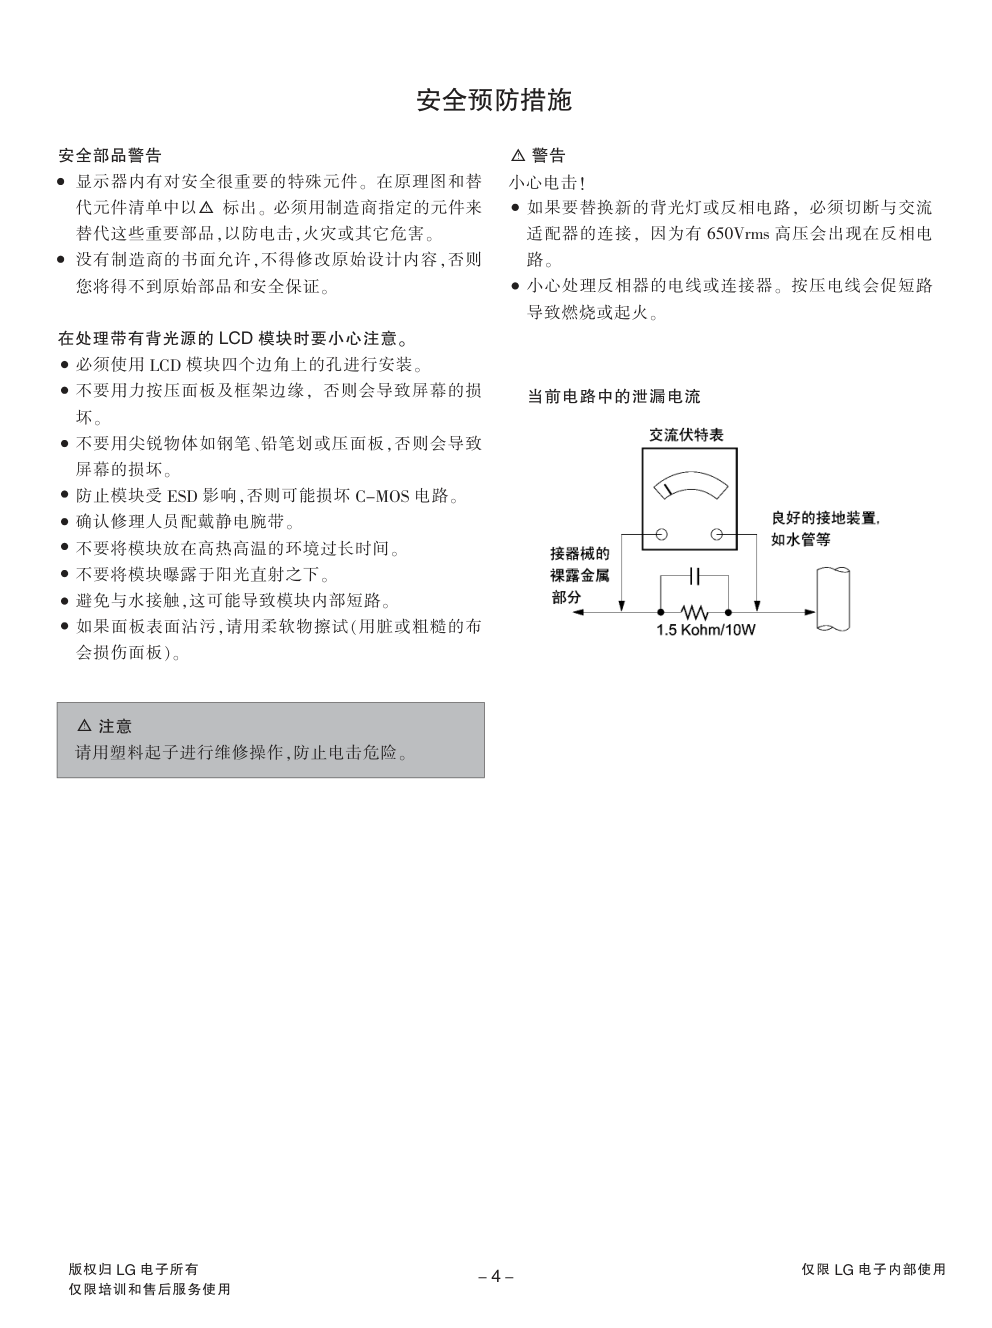 LG L1942SE液晶显示器维修手册和图纸-3